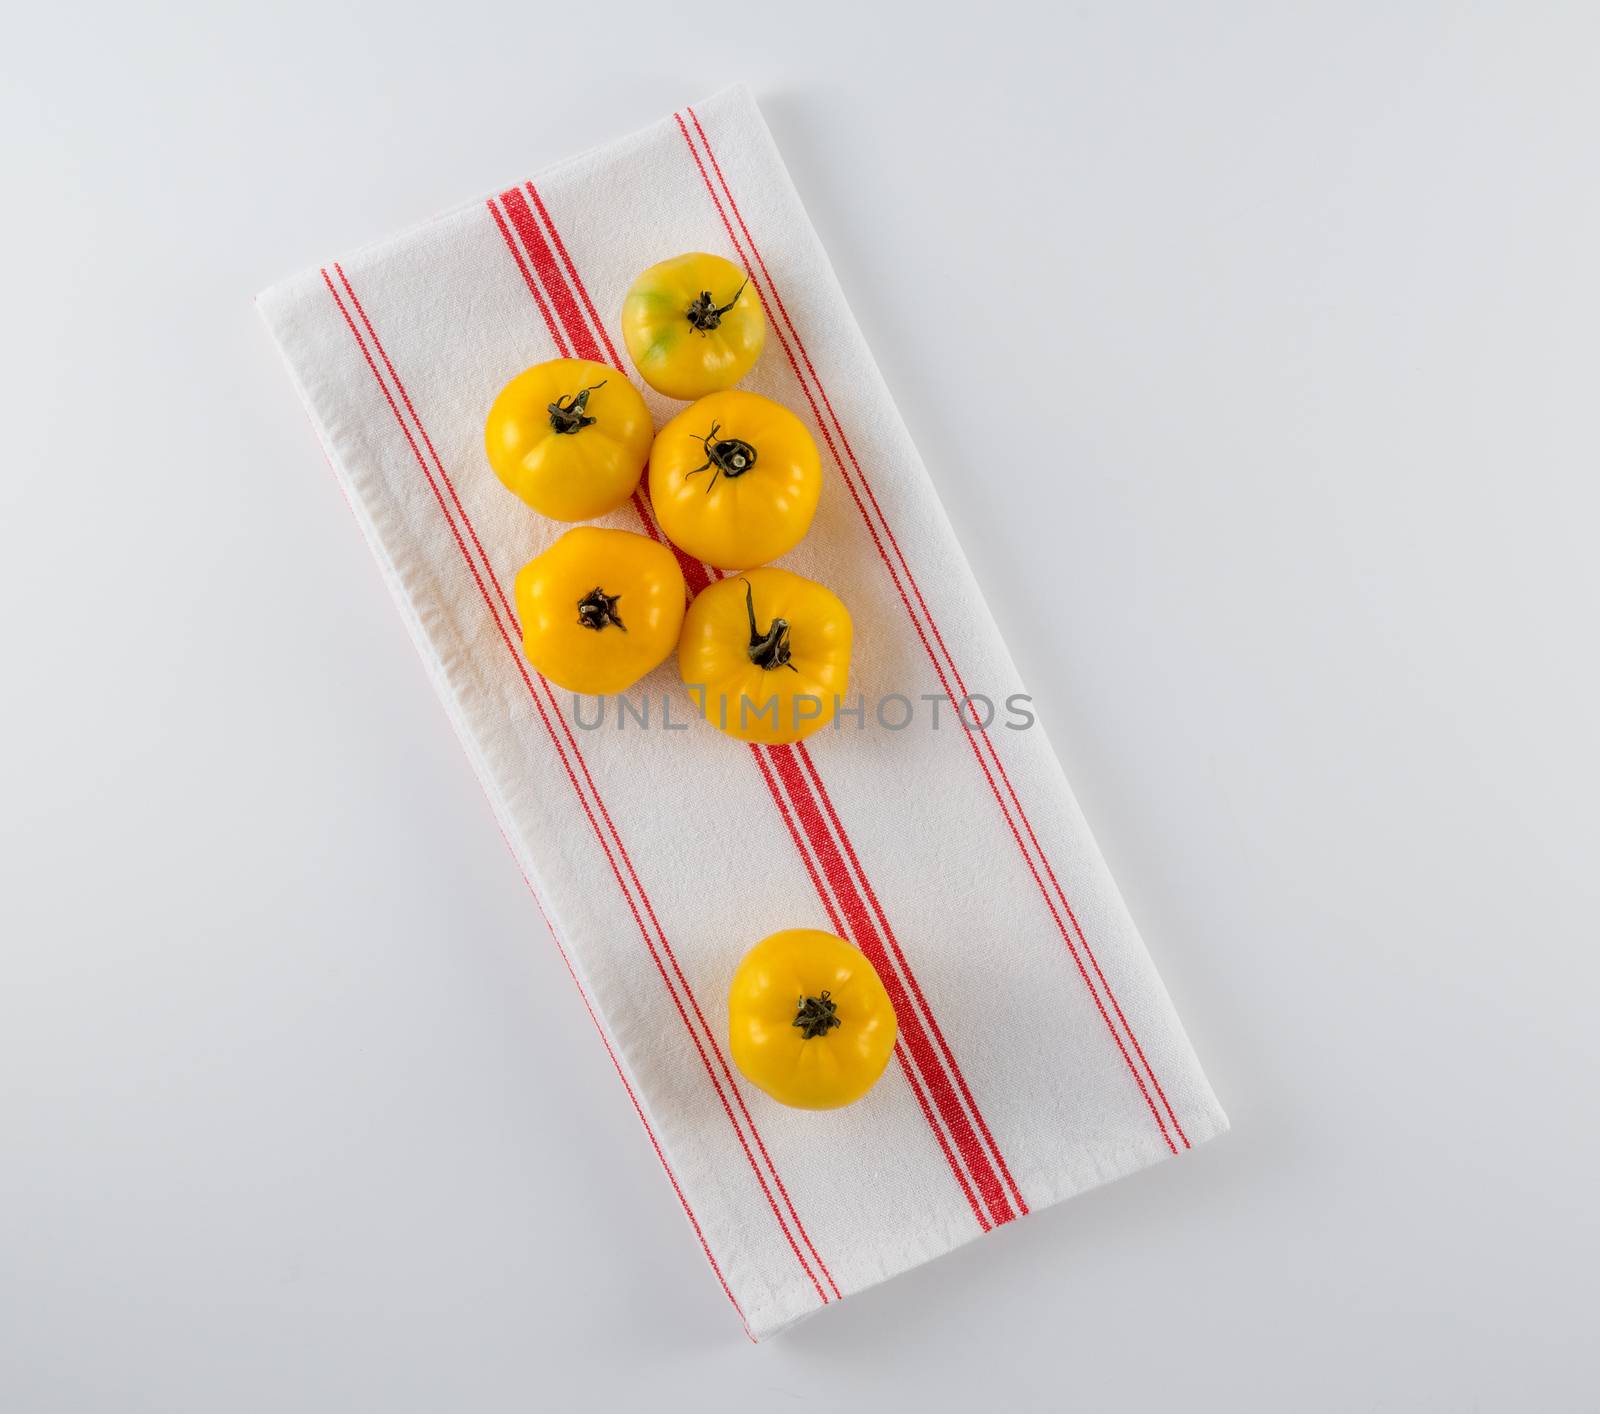 Vibrant yellow heirloom tomatoes on French tea towel